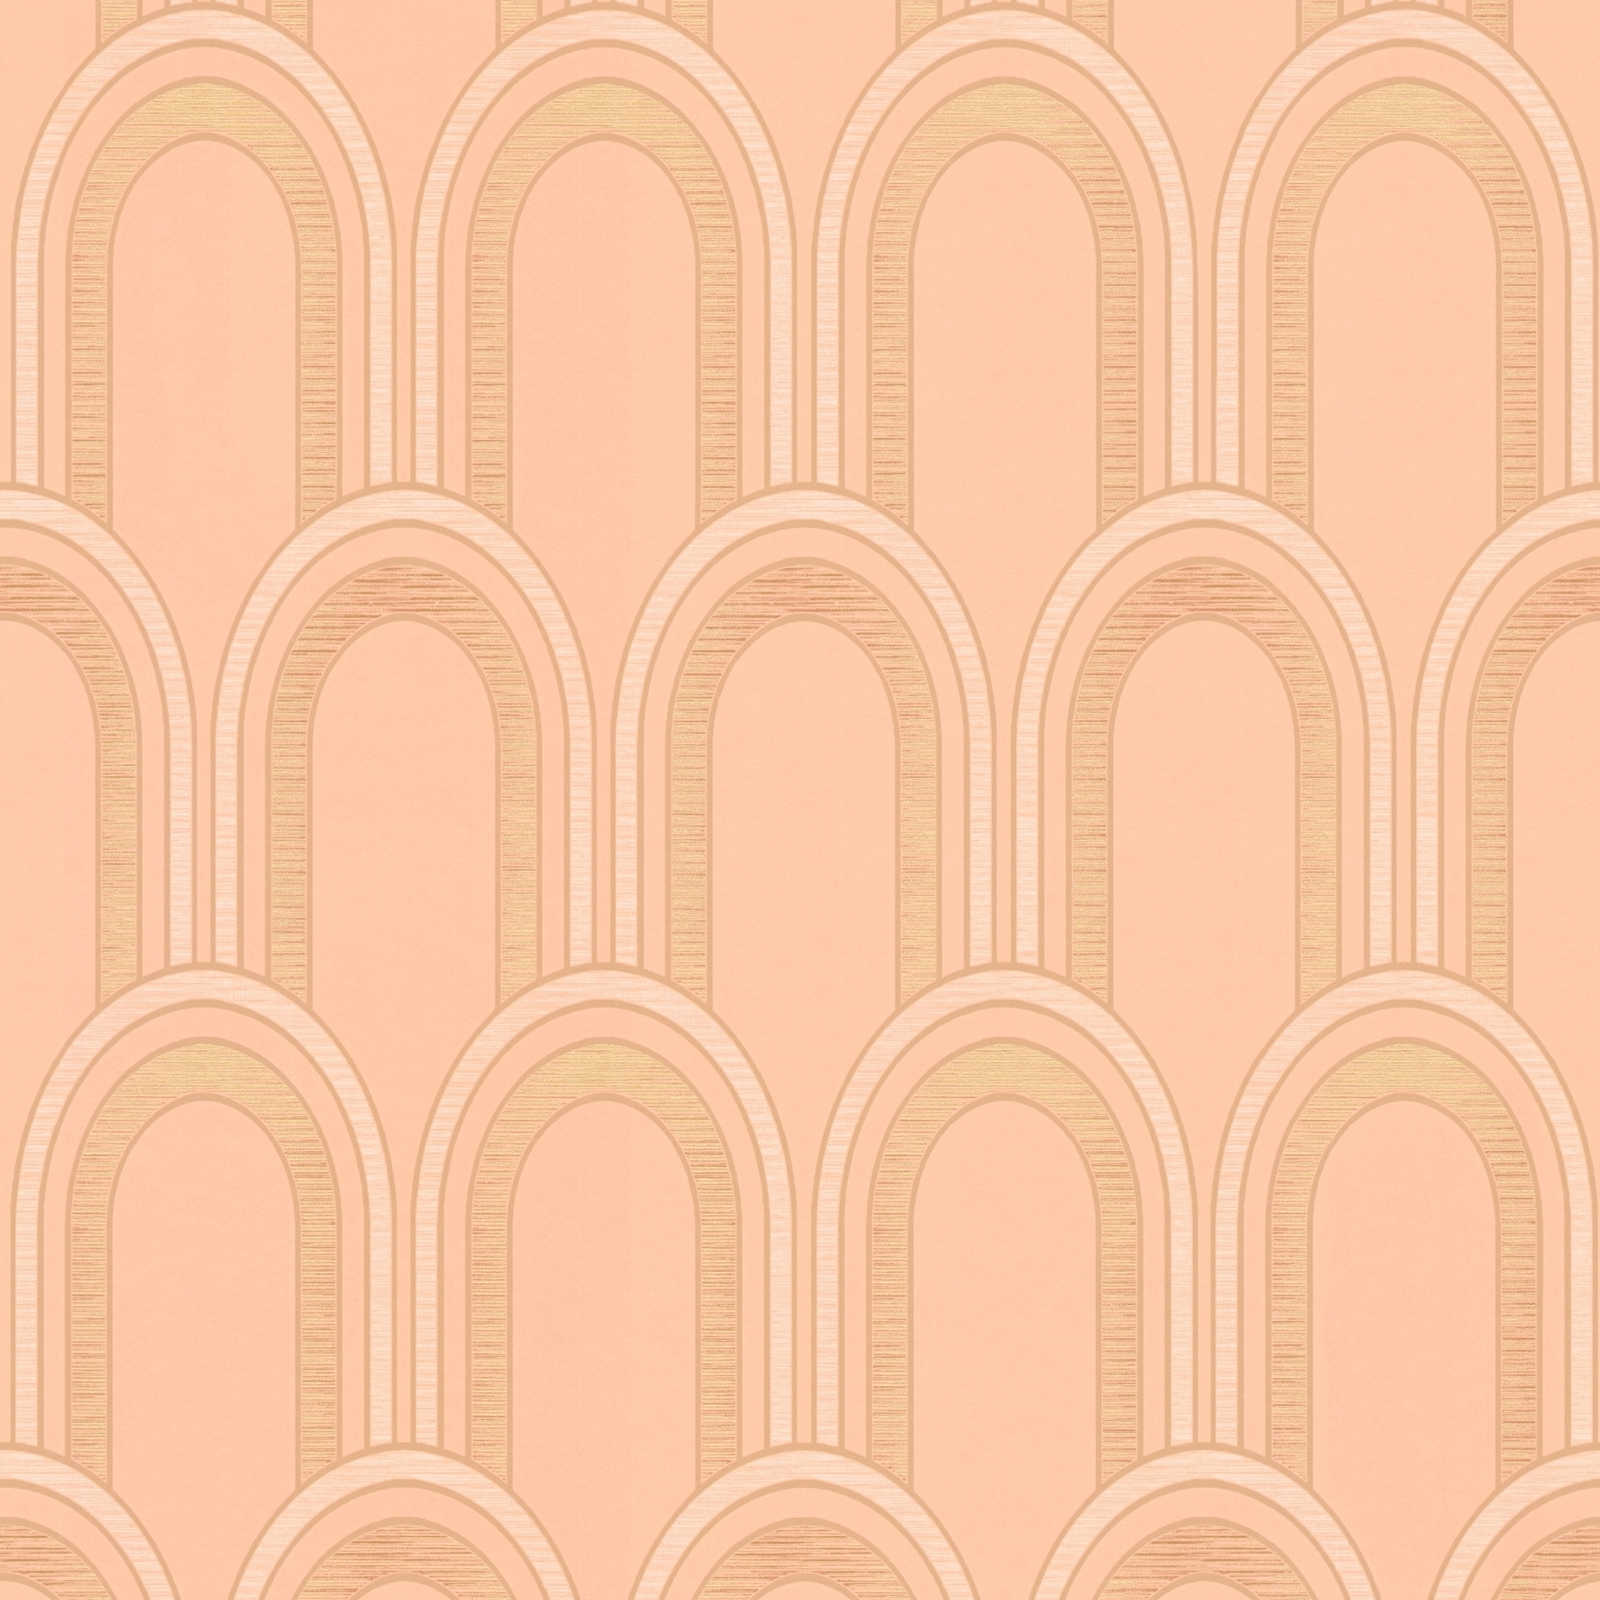 Non-woven wallpaper with bow pattern - orange, white, gold
